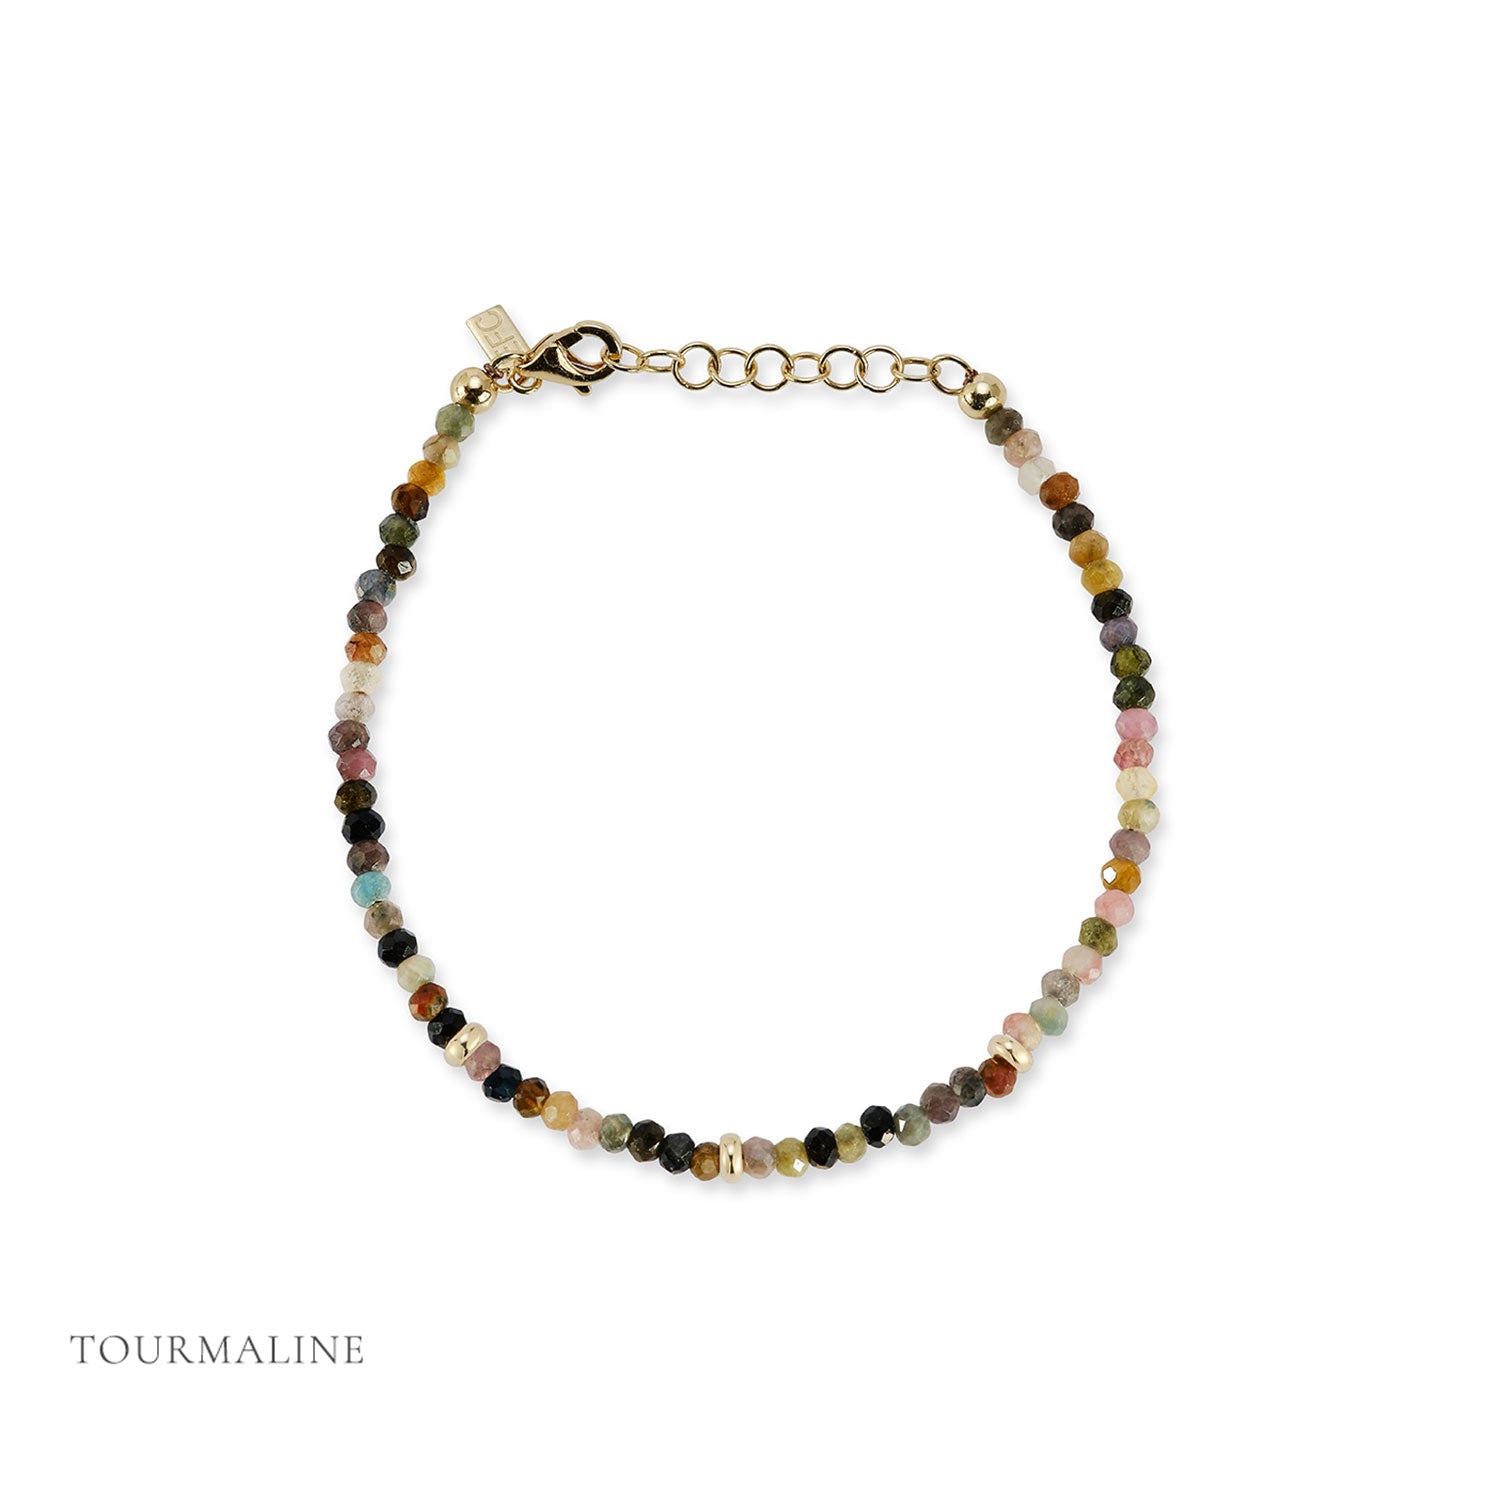 Birthstone Bead Bracelet In Tourmaline with 14k yellow gold chain